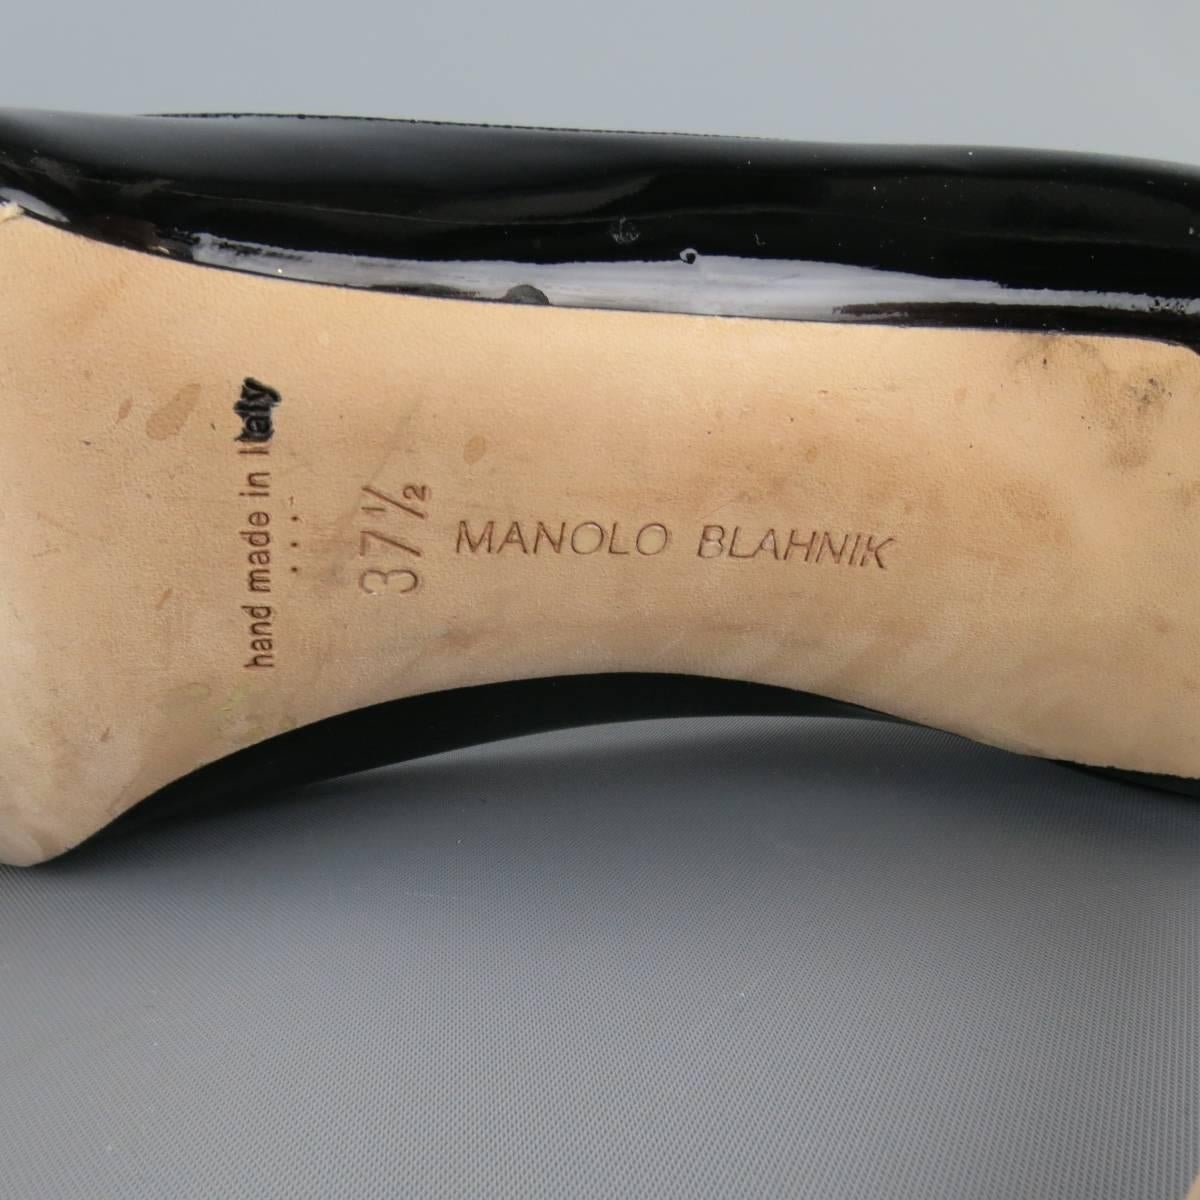 MANOLO BLAHNIK Size 7.5 Black Patent Leather Classic Pointed Toe Stiletto Pumps 2